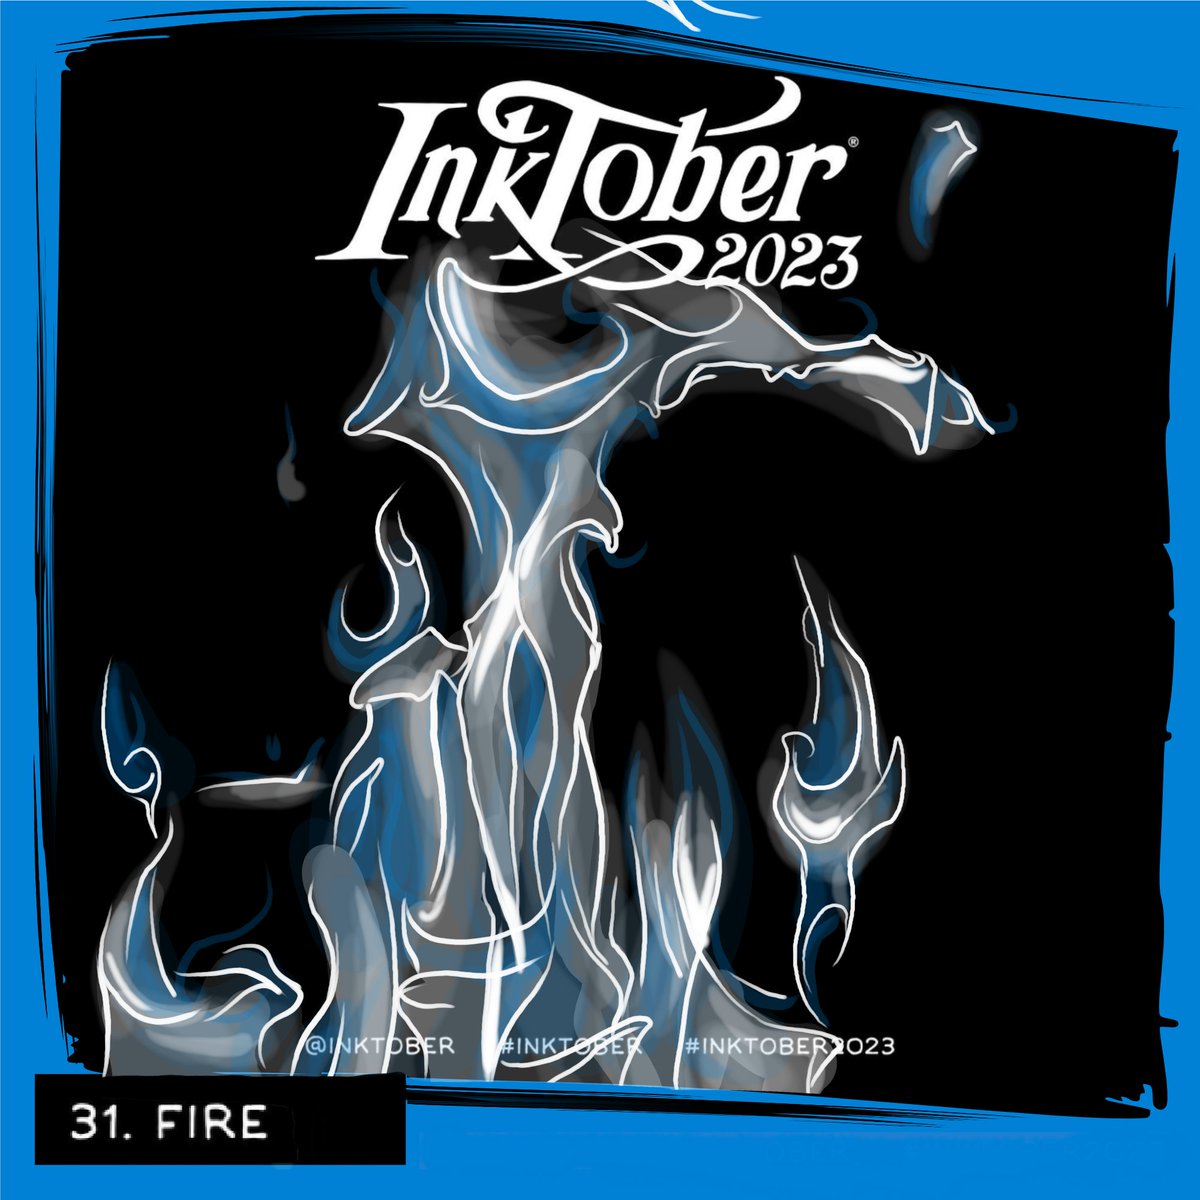 31. Fire #inktober #inktober2023 #inktoberFire #inktober2023Fire #digitalink #art #inkwork #weird #blueandwhite #sketch #design #inking #inkwork #doodle #creative #fire @surface #createdonsurface